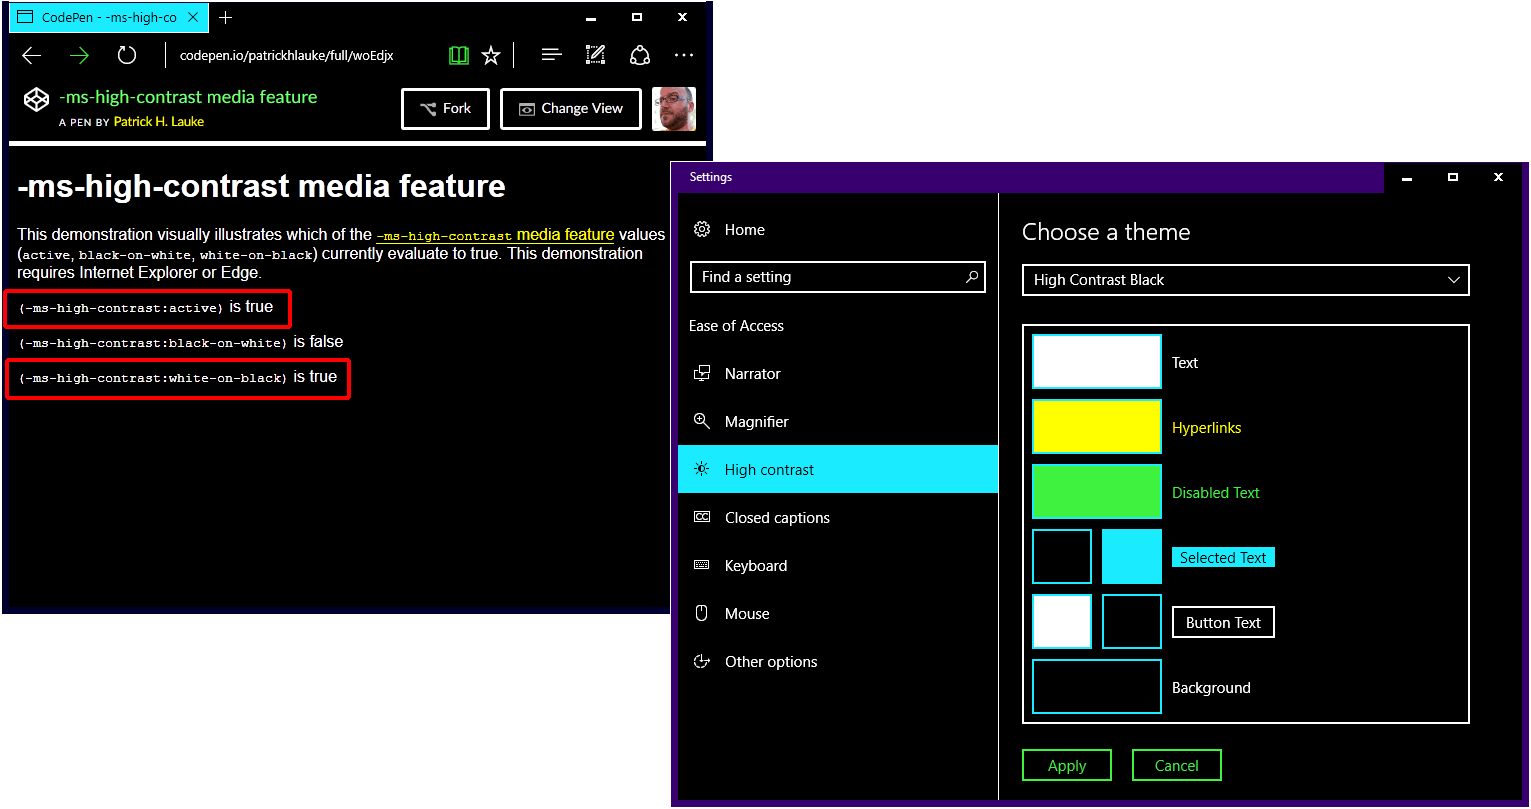 Screenshot of media feature test in Edge in High Contrast Black mode